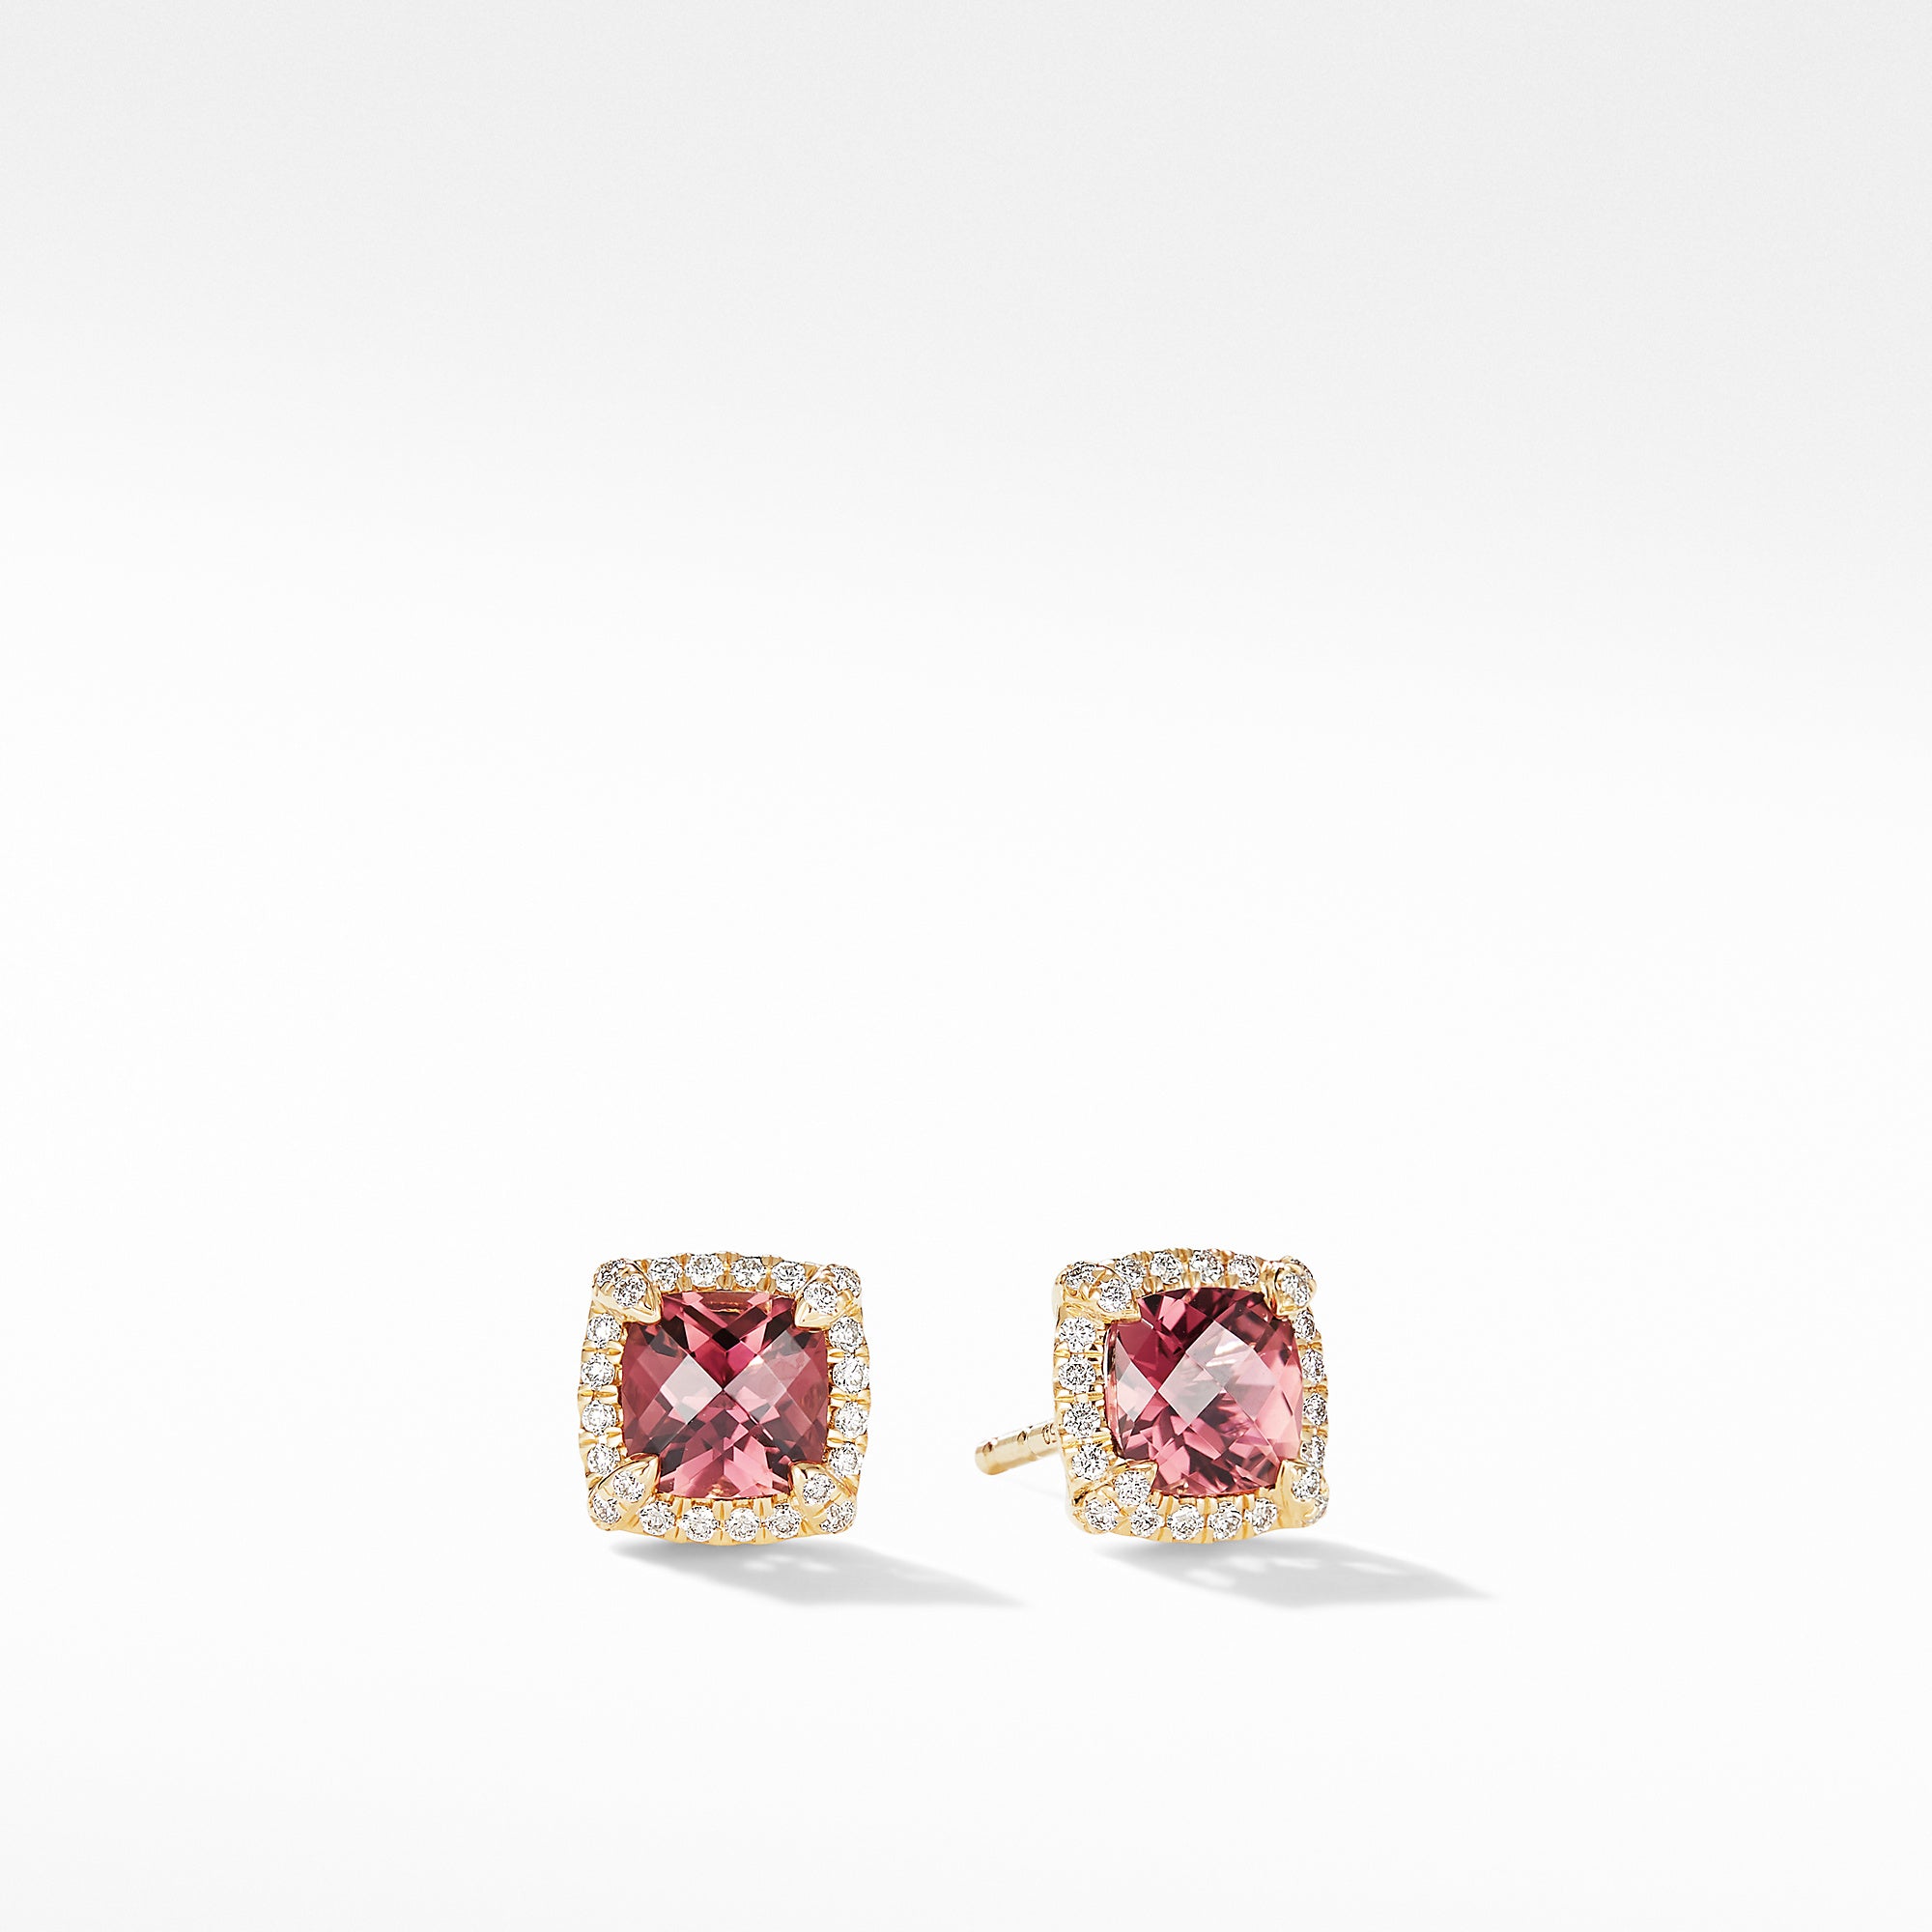 Pink Tourmaline Birthstone Stud Earrings in 14K Yellow Gold (October)